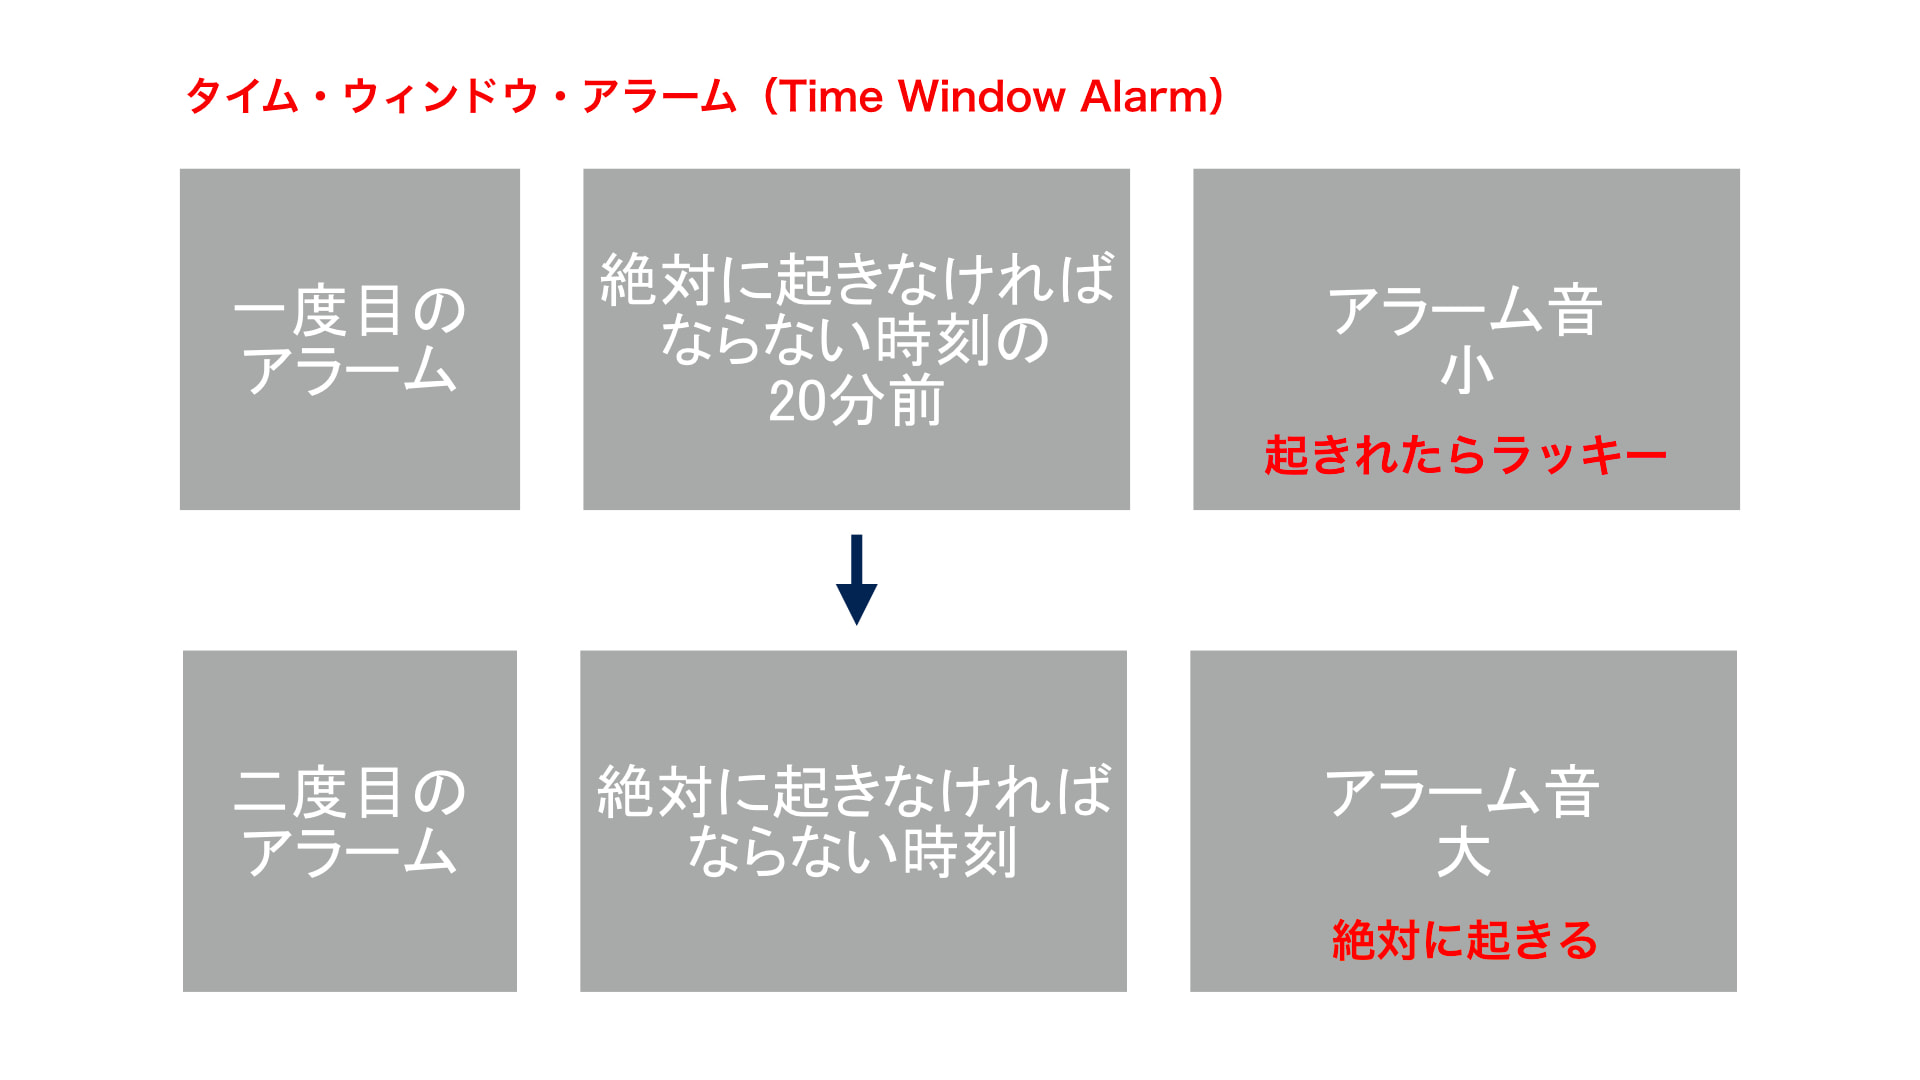 Time-Window-Alarm